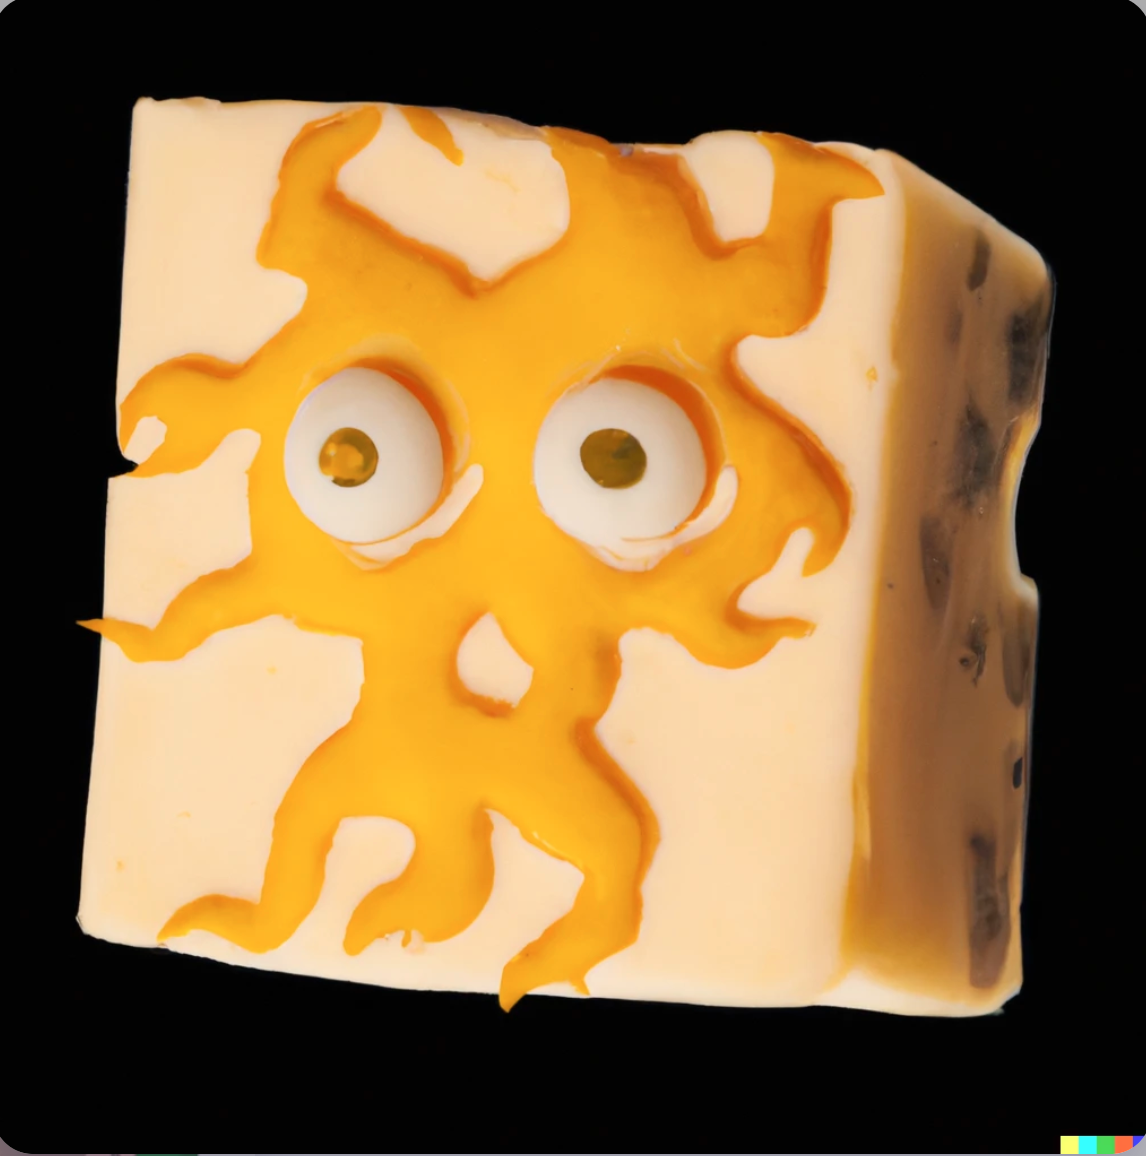 Cheese creature